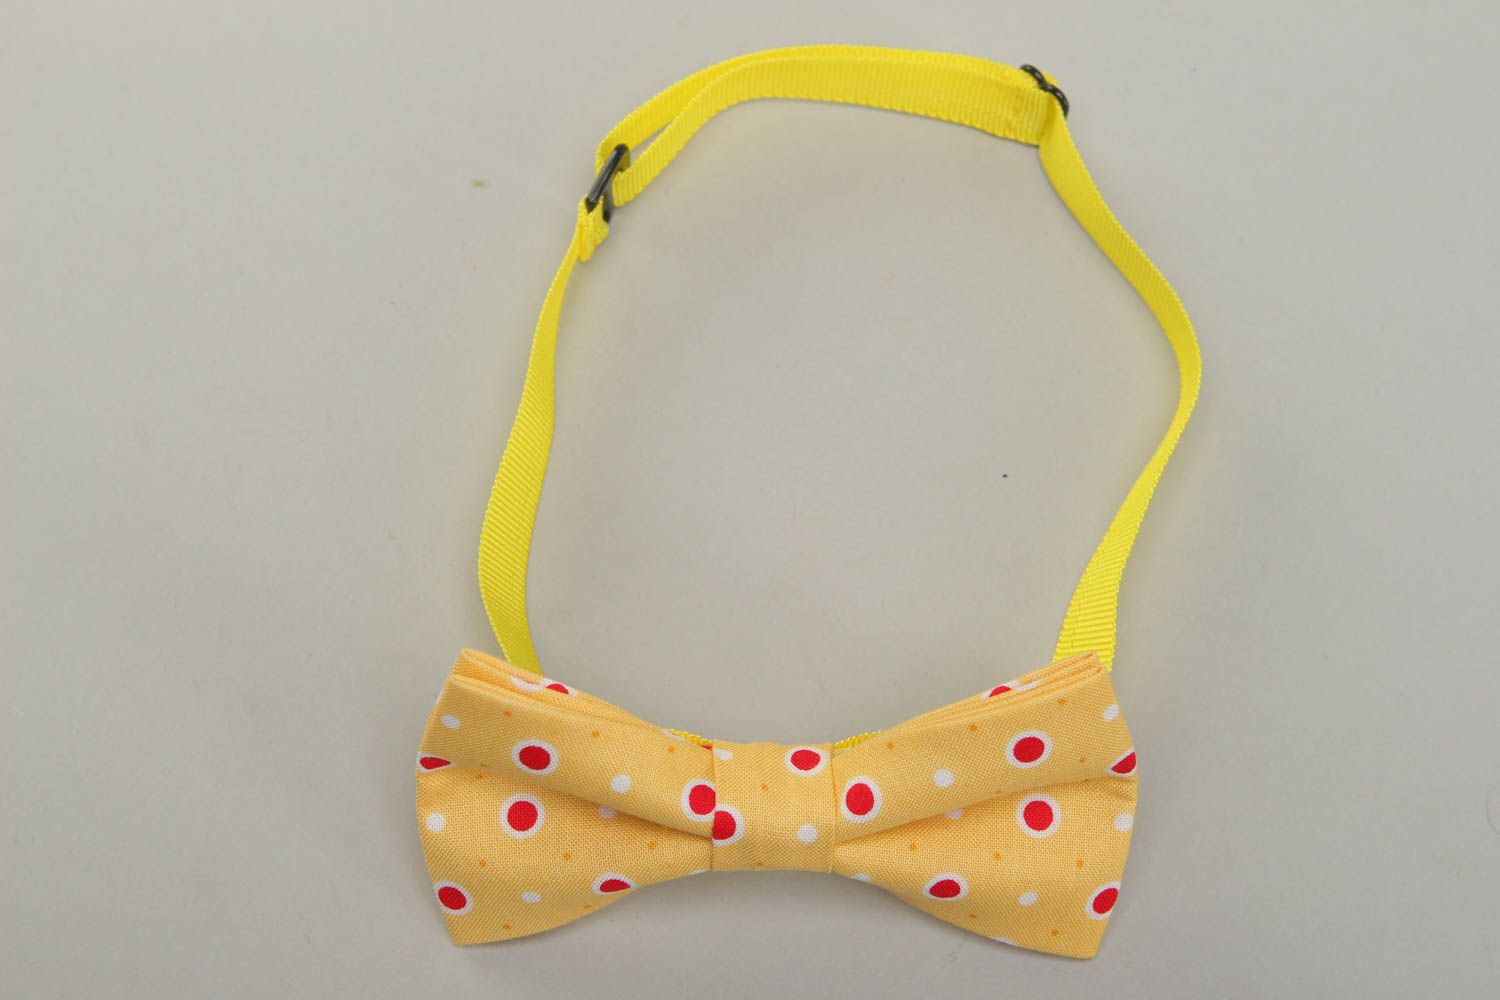 Bow tie made of yellow polka dot fabric photo 1